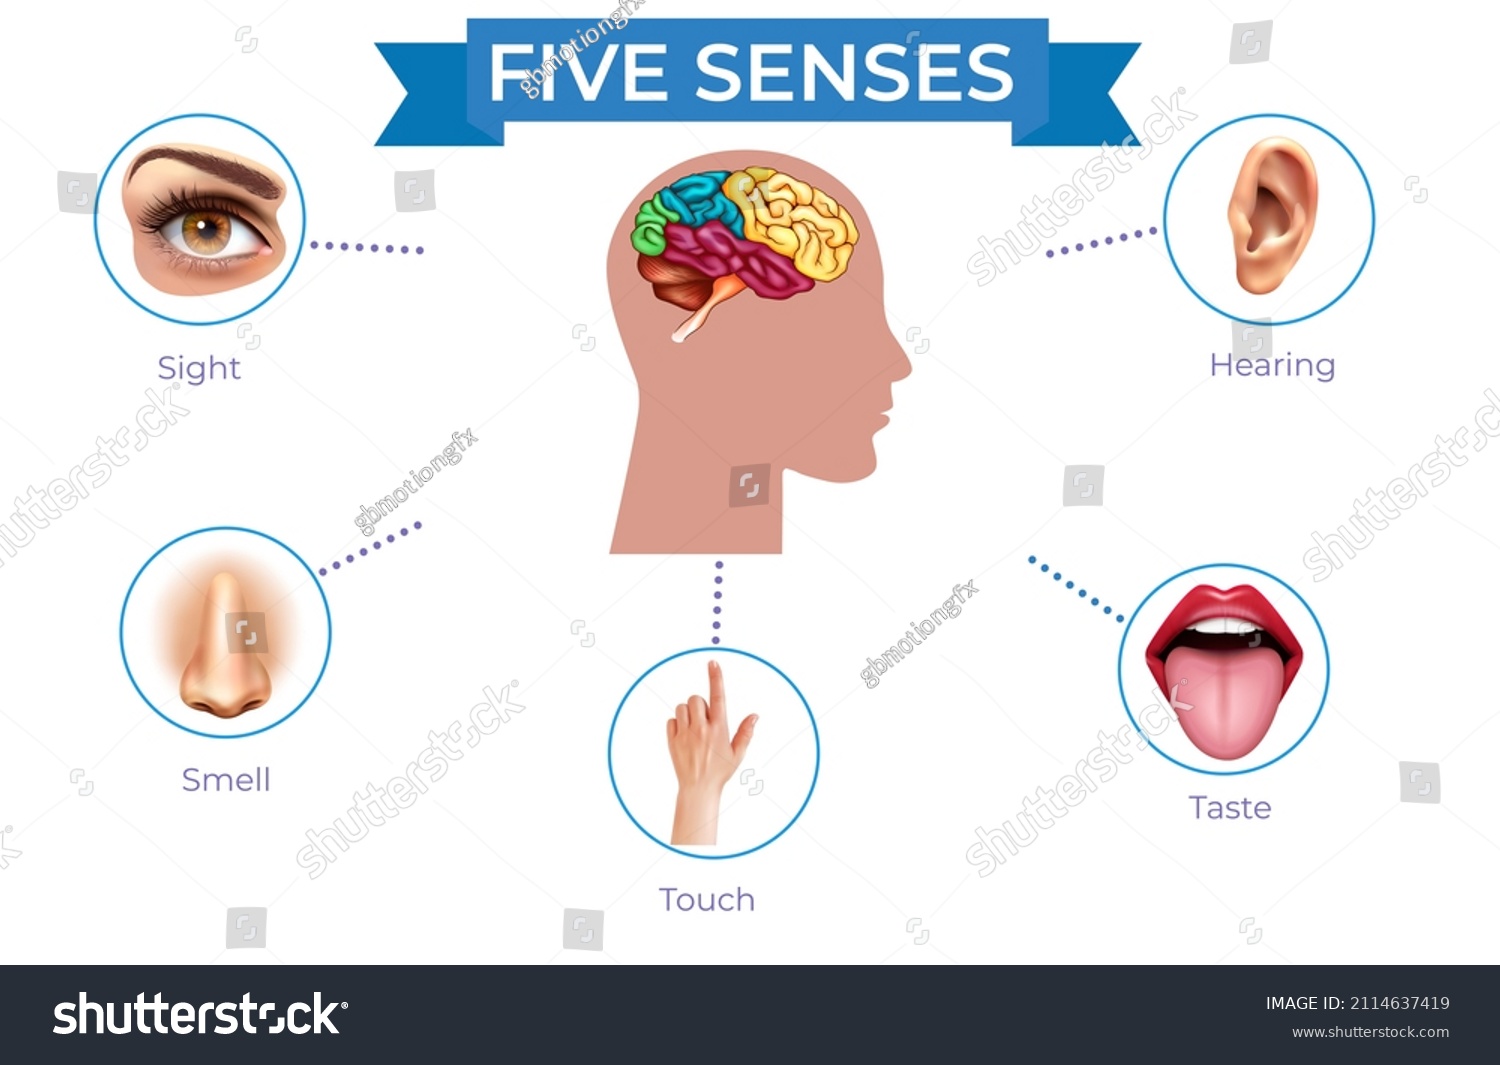 Five Human Senses Illustation Stock Illustration 2114637419 | Shutterstock